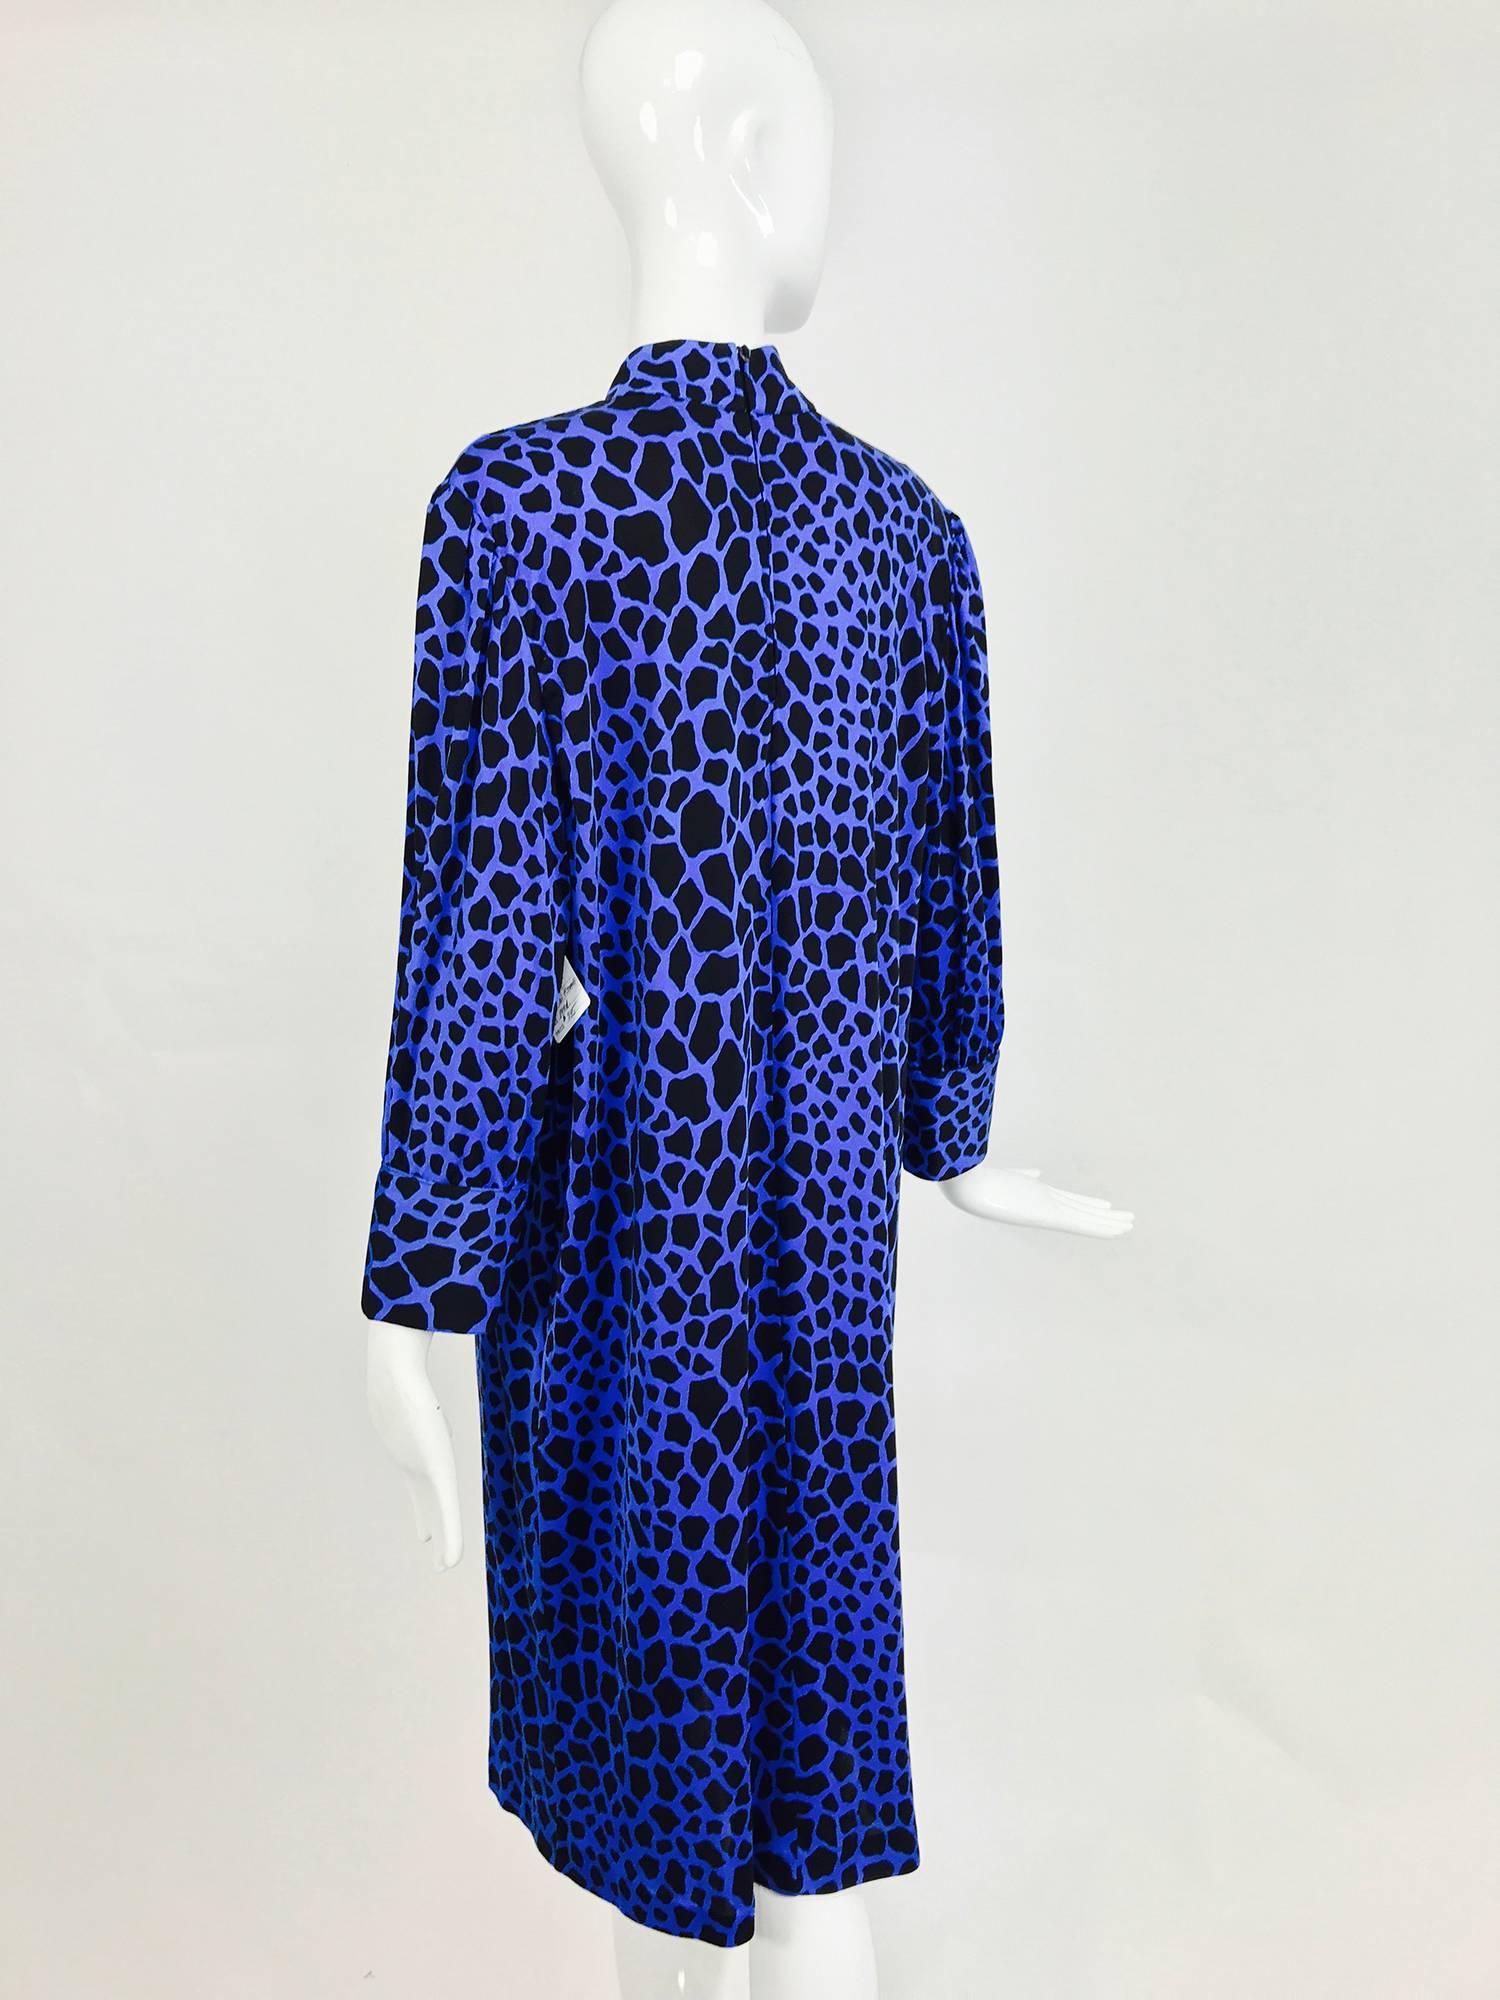 Vintage Gibi, Roma silk jersey leopard spot dress in black and blue 1970s 1